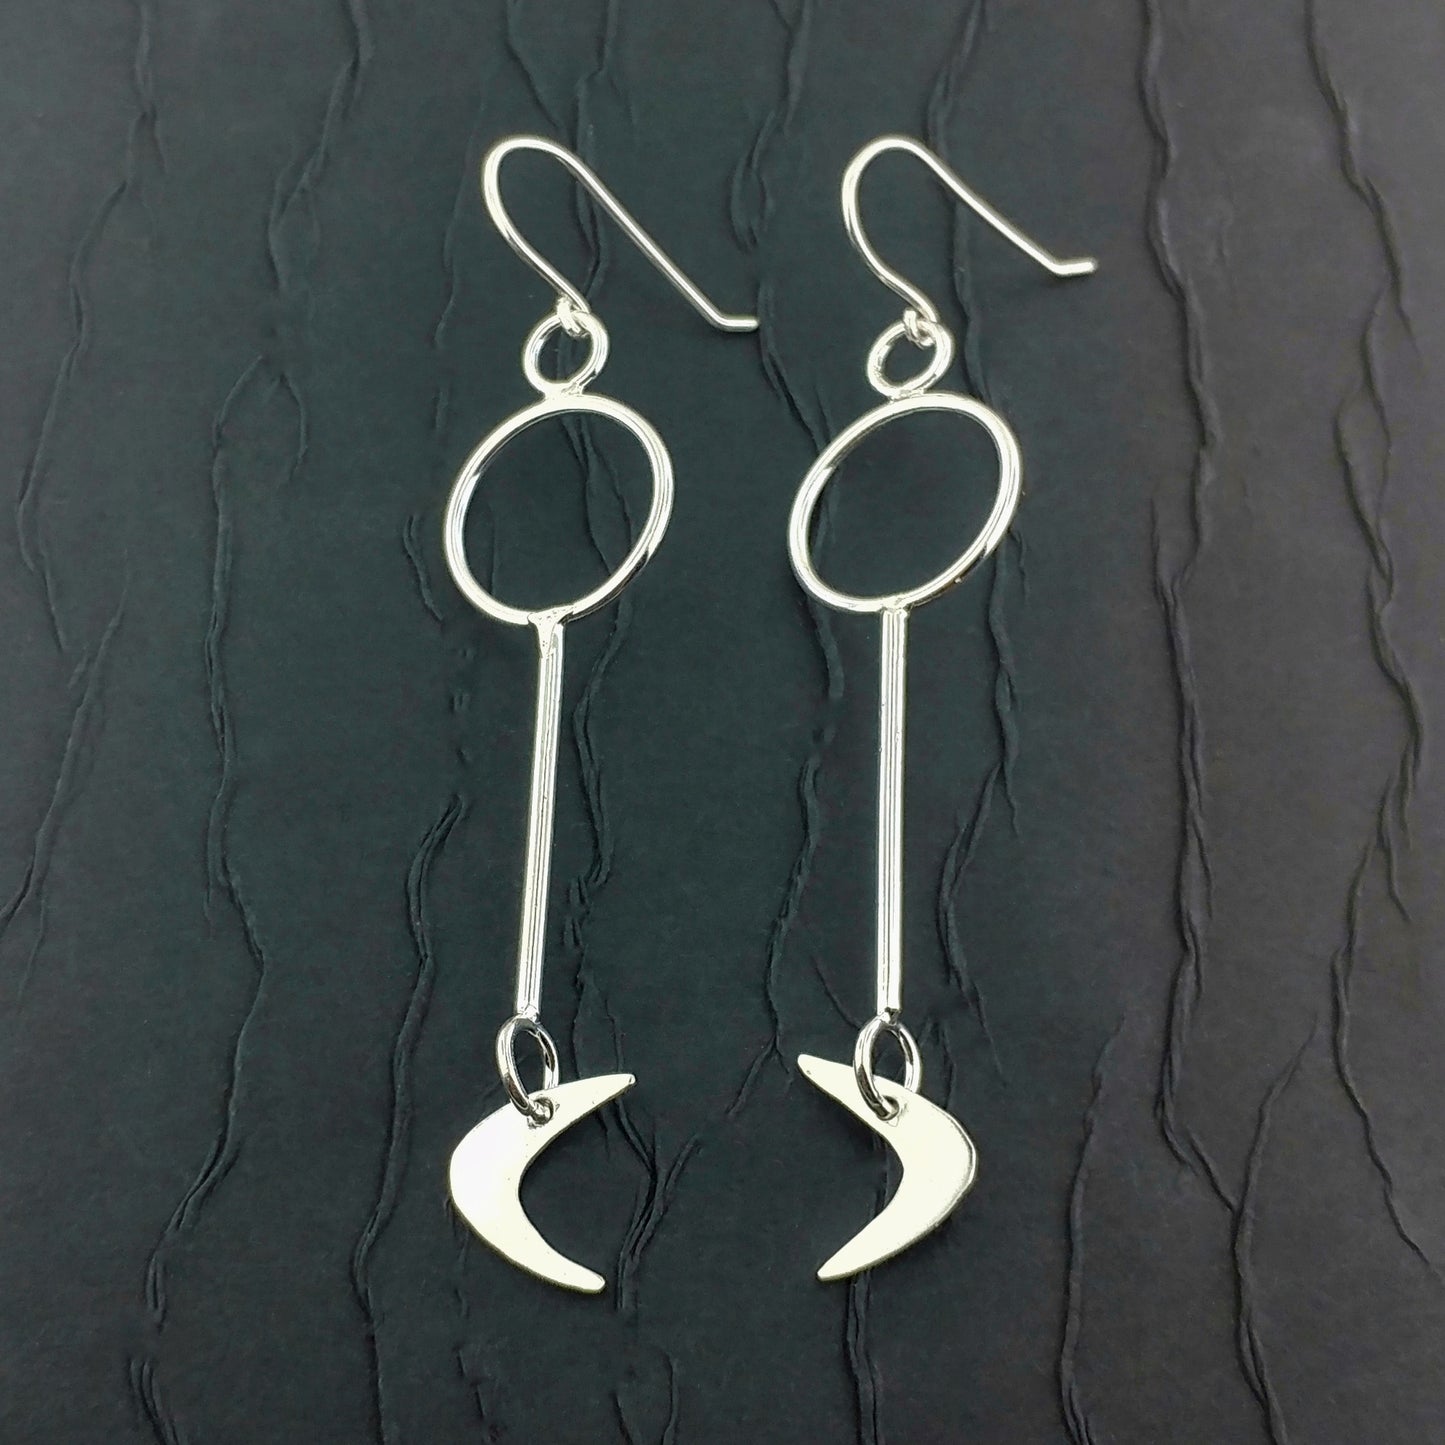 Mid century modern inspired sterling silver boomerang earrings